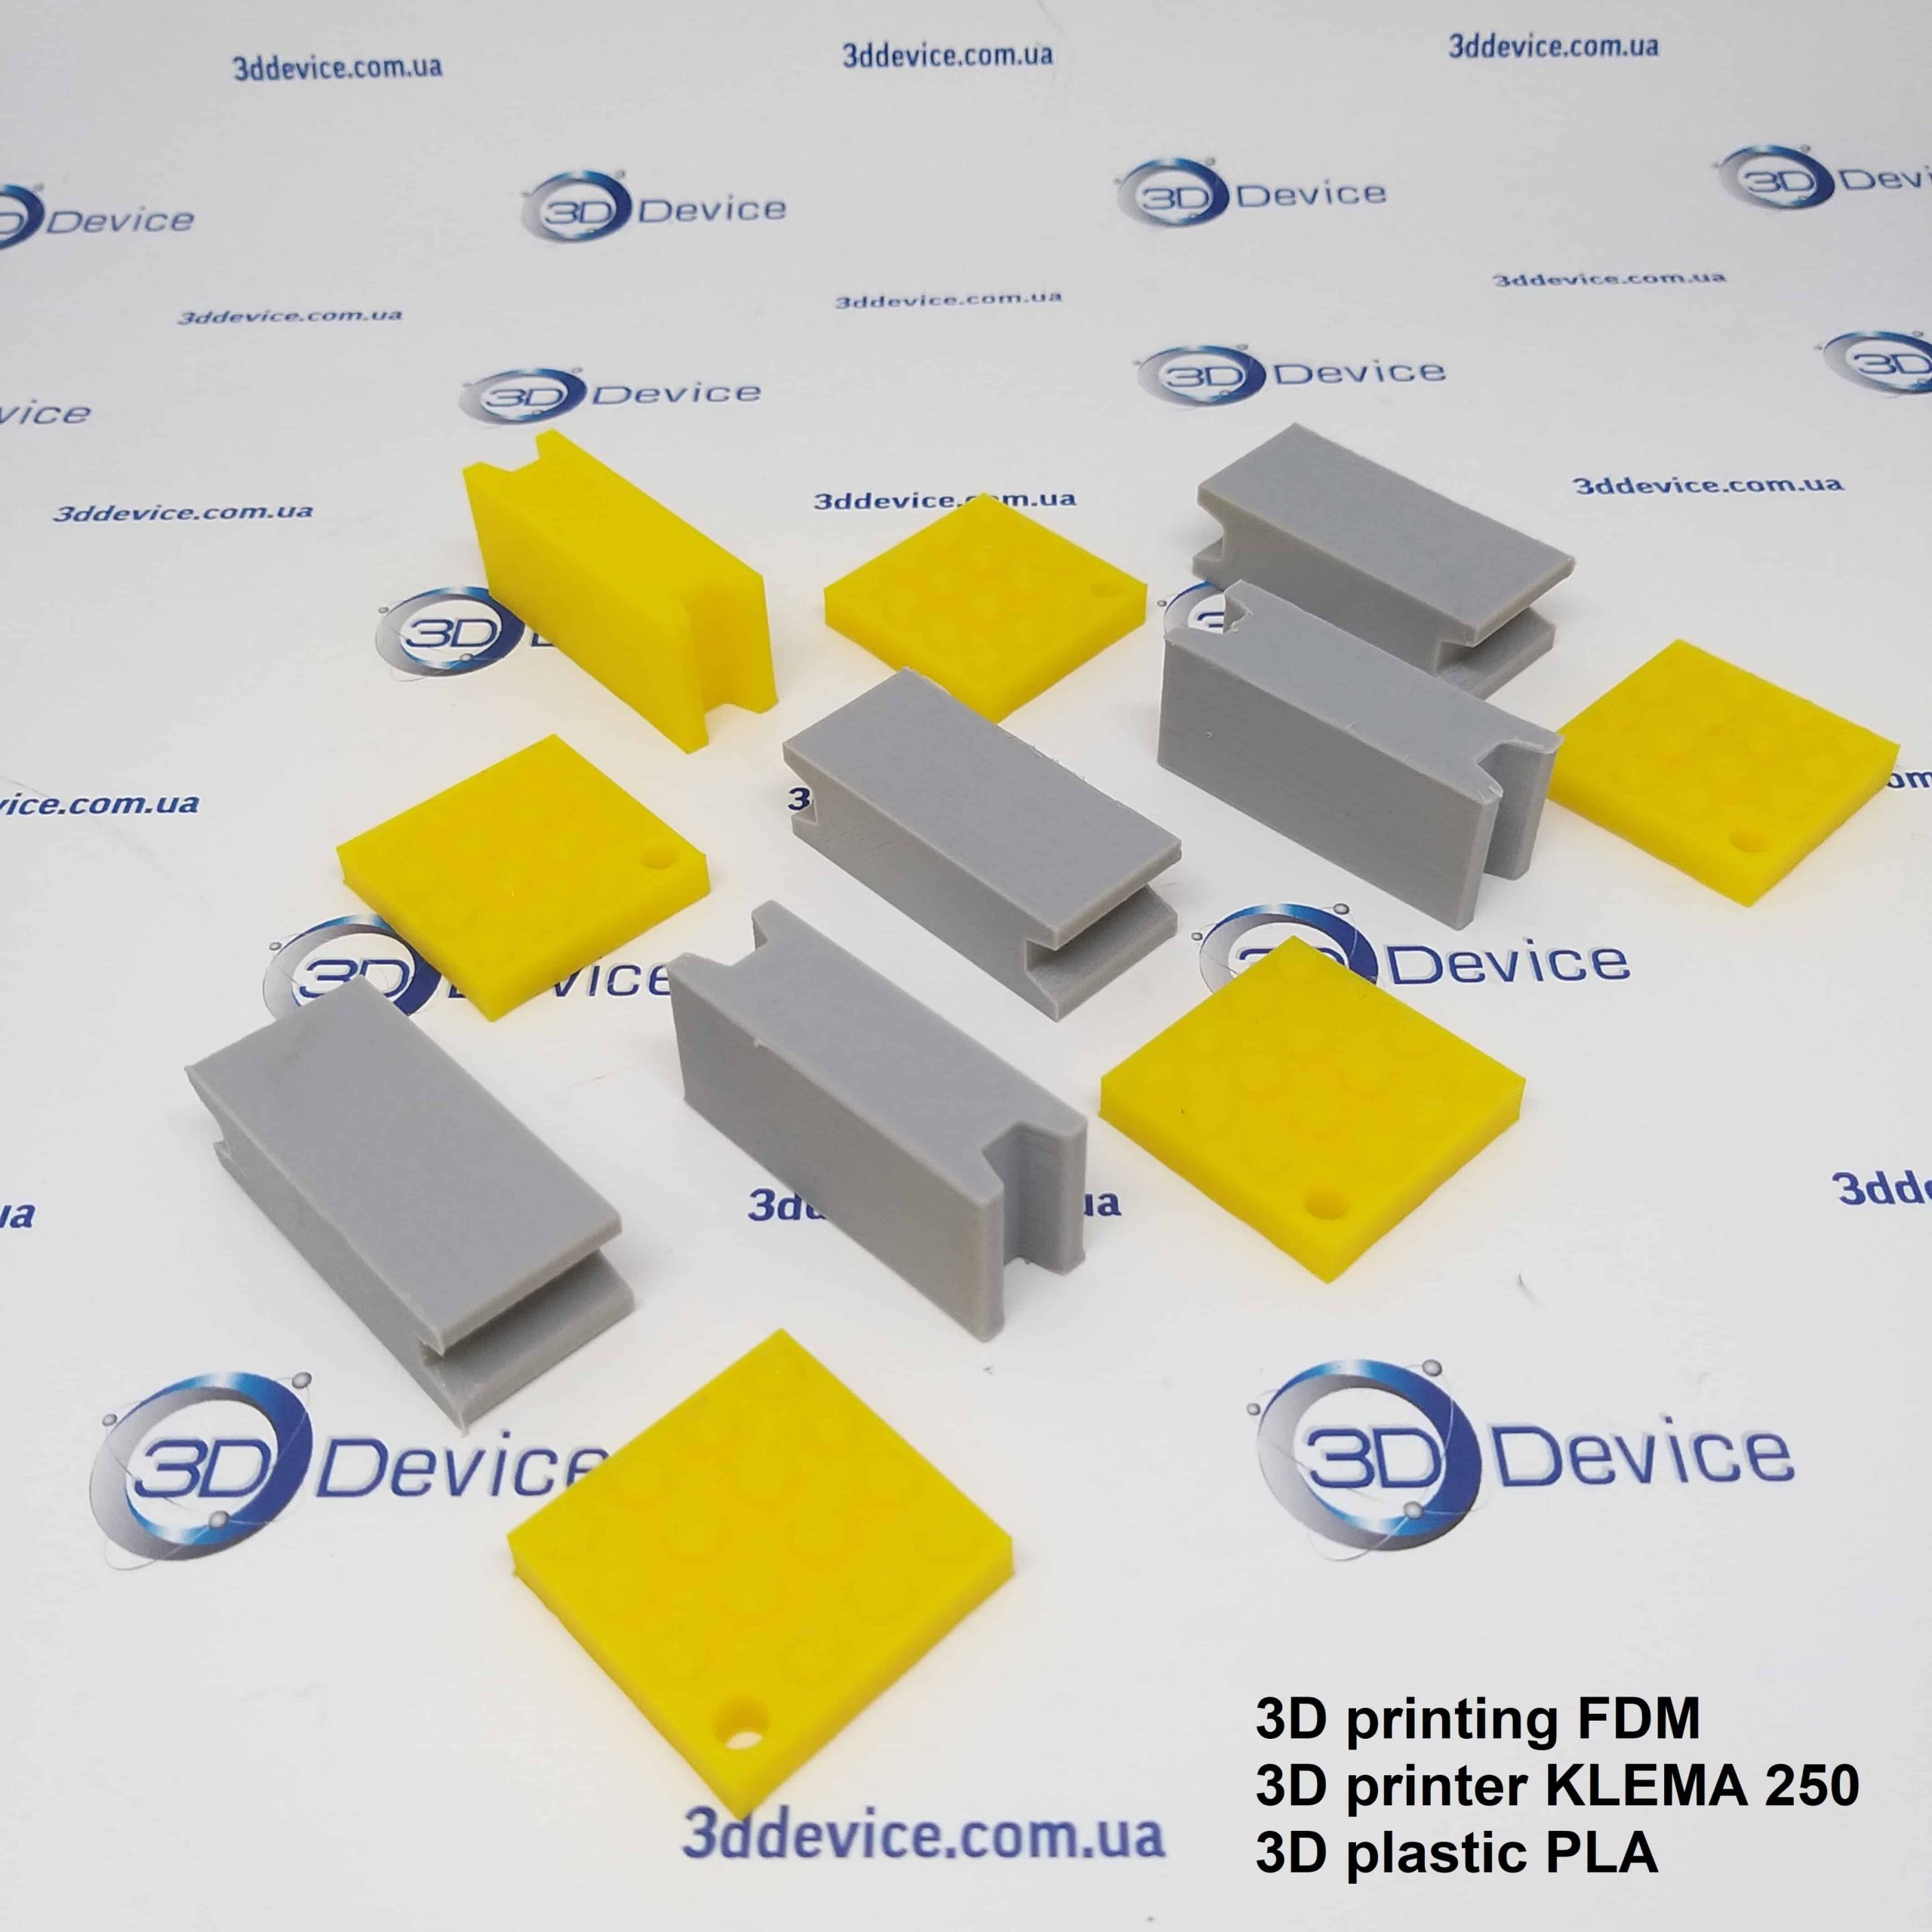 3D printing service FDM order in Ukraine